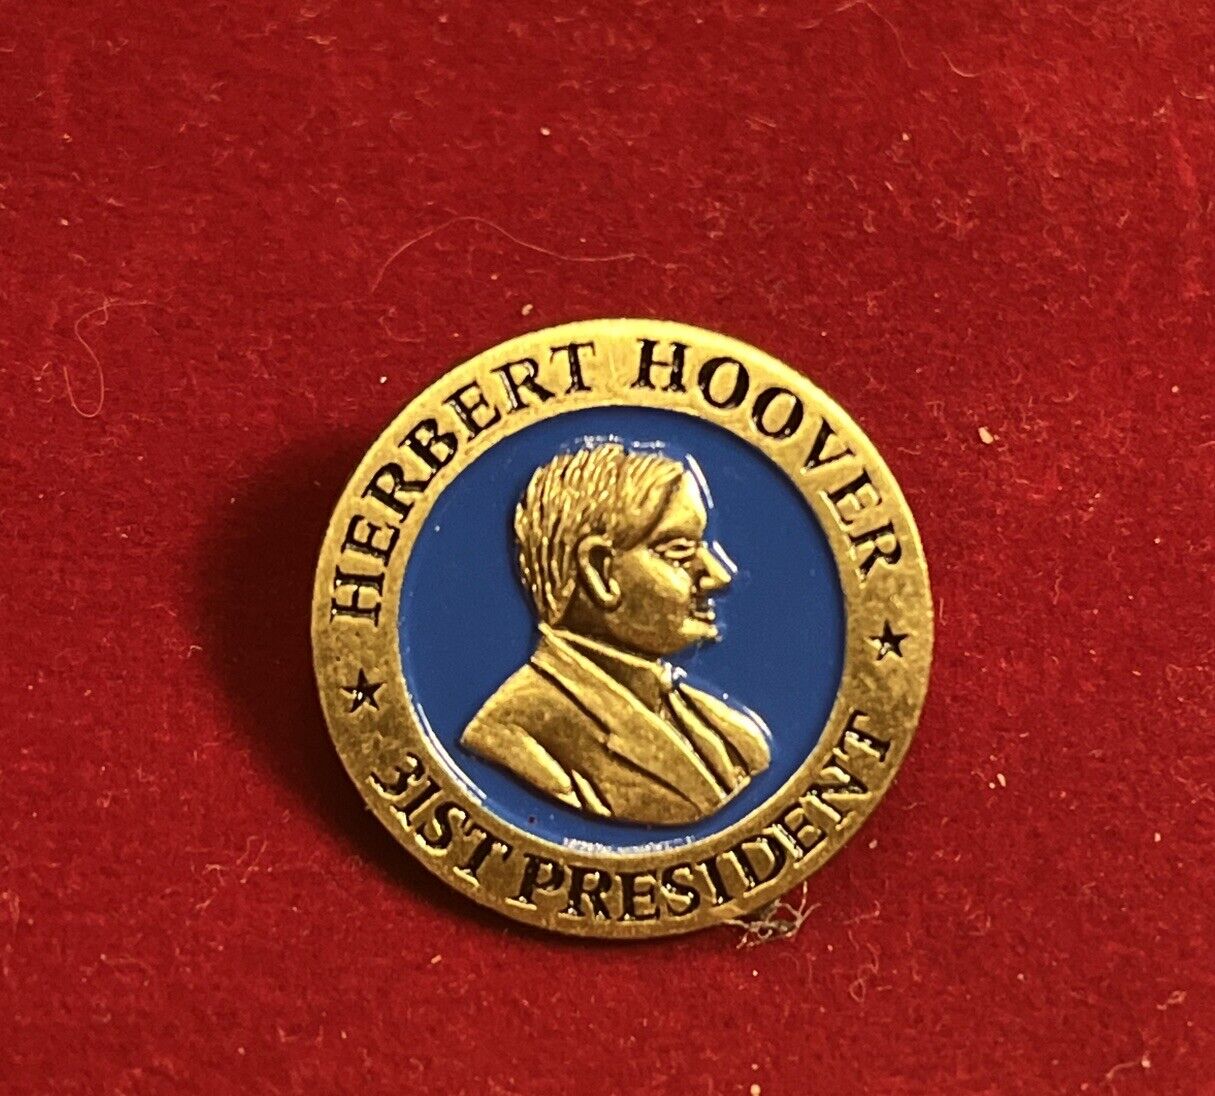 Herbert Hoover 31st President Collectible Lapel Pin LW Bristol Classics